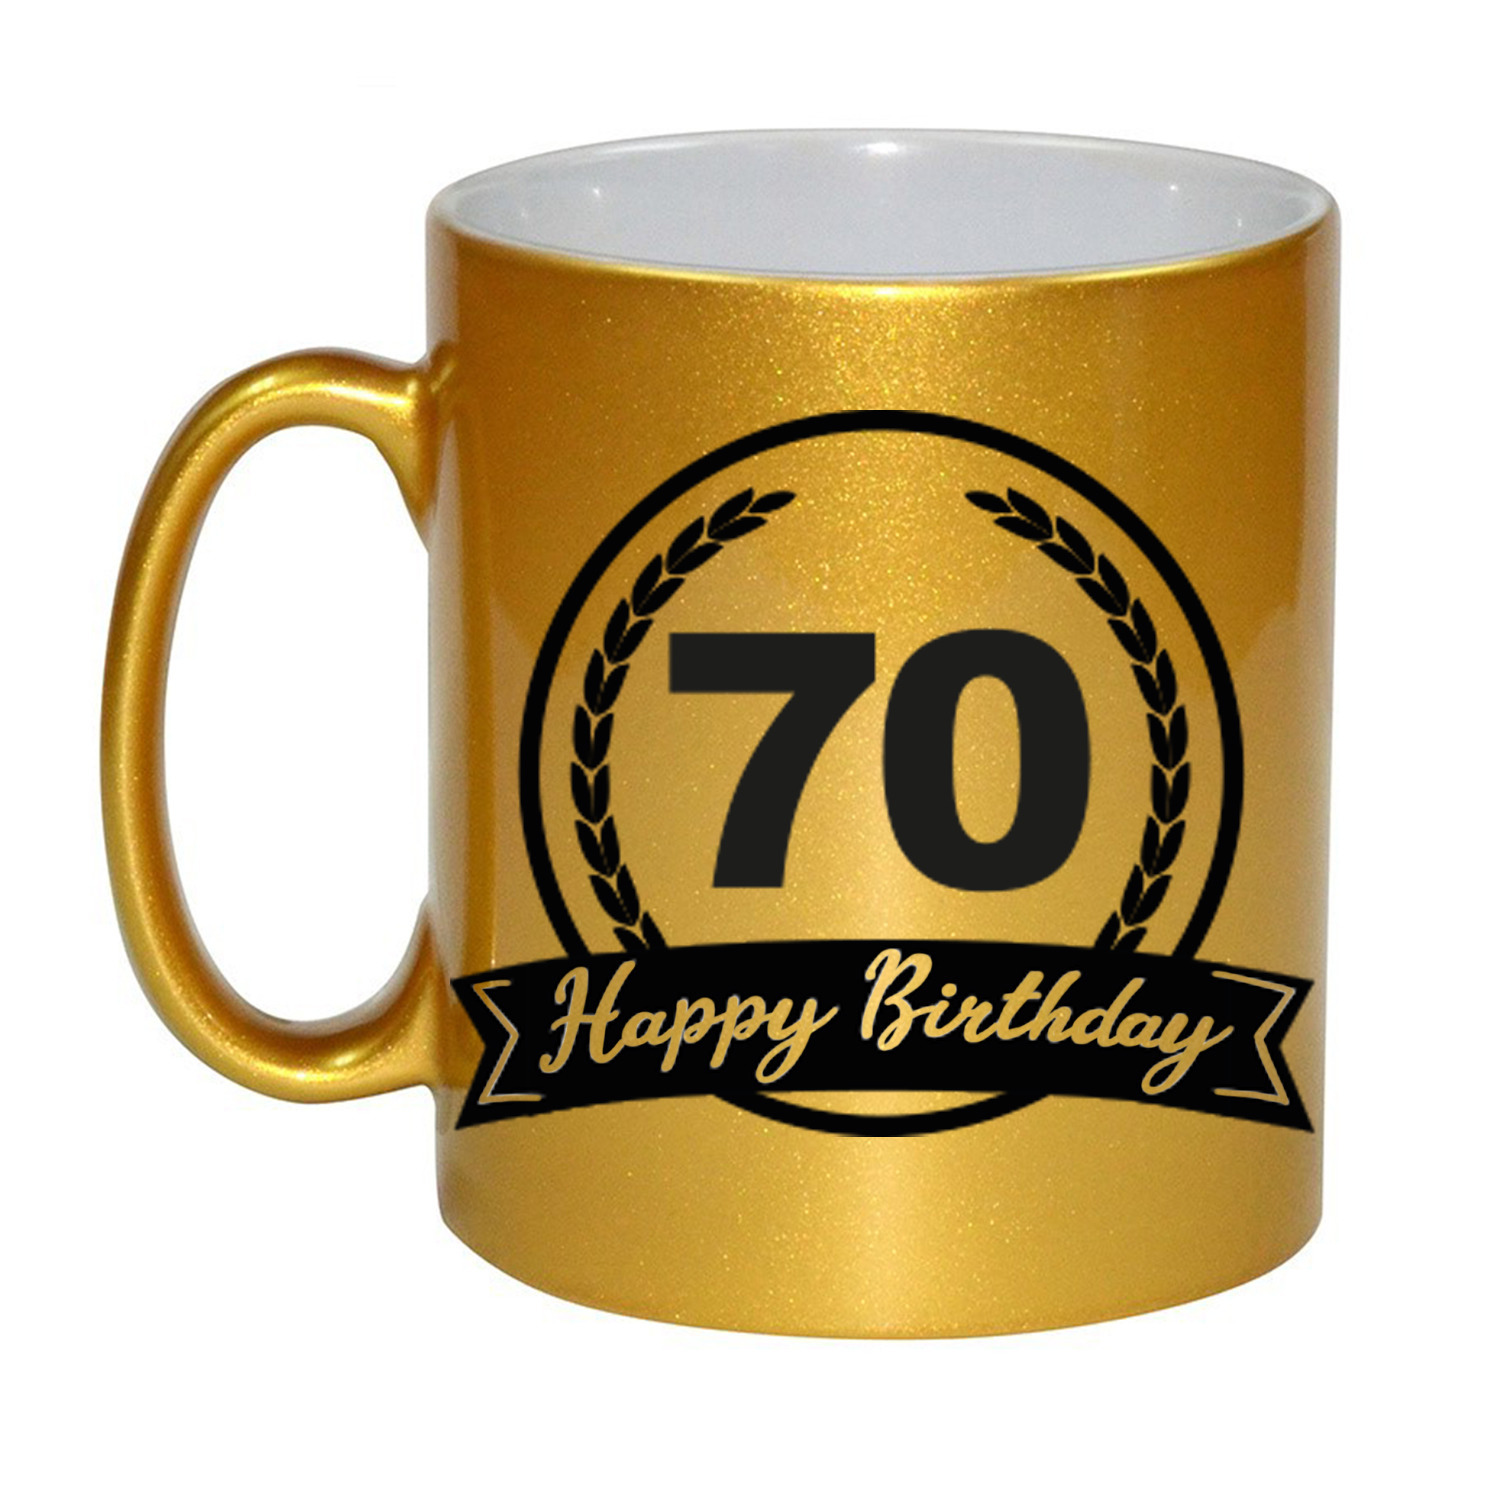 Happy Birthday 70 years gouden cadeau mok / beker met wimpel 330 ml